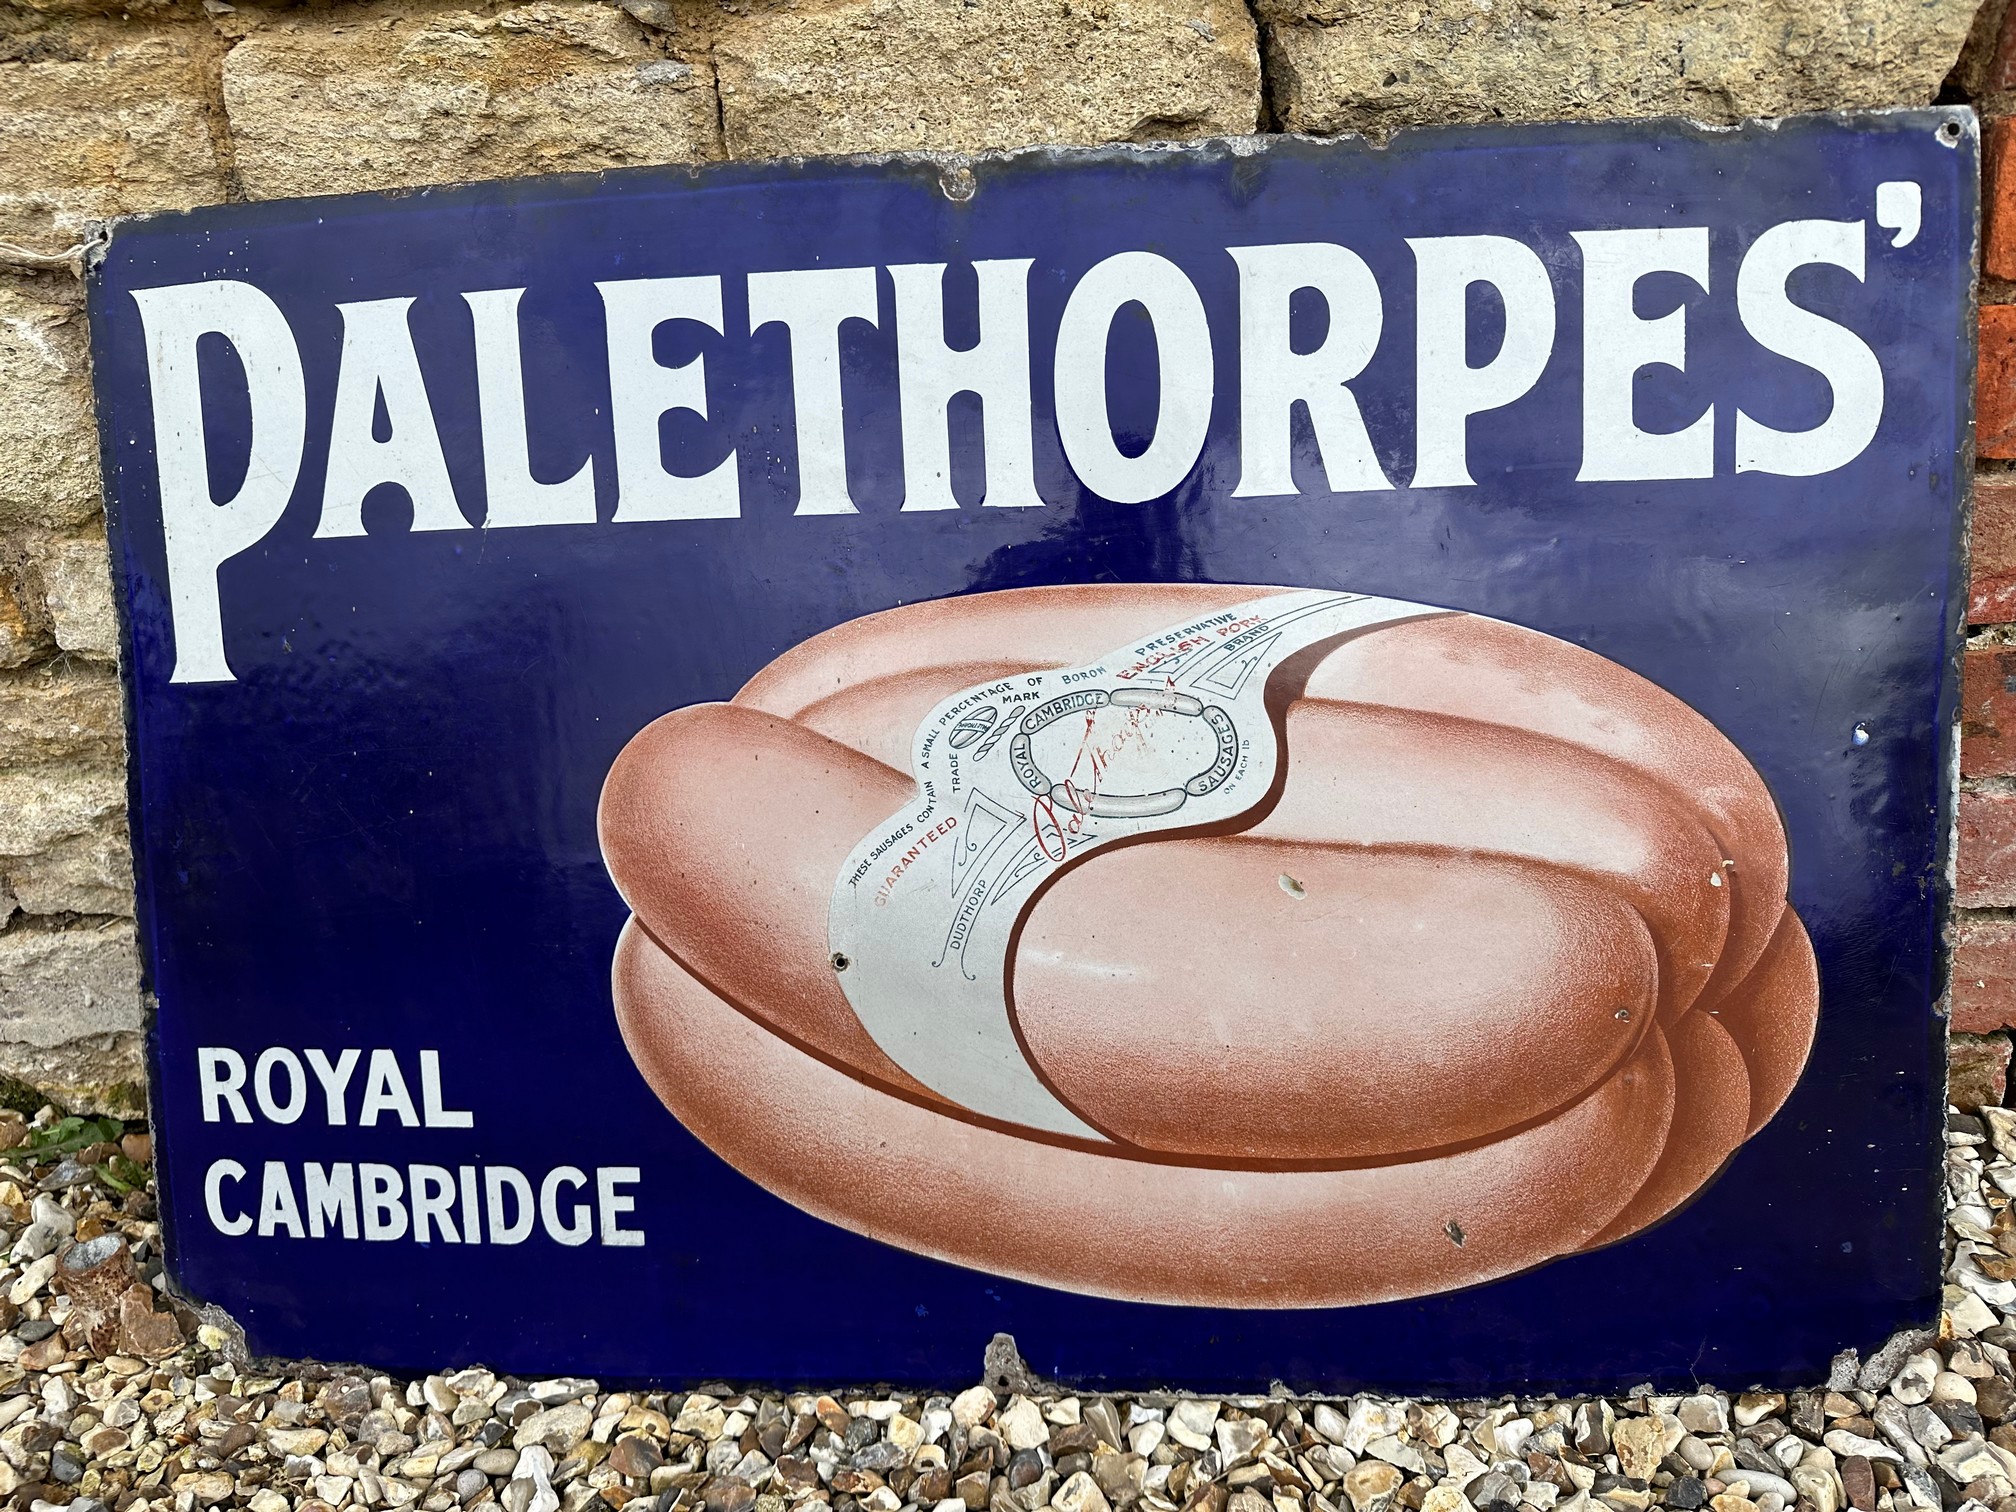 A Palethorpes' Royal Cambridge (sausages) pictorial enamel advertising sign, 36 x 24".